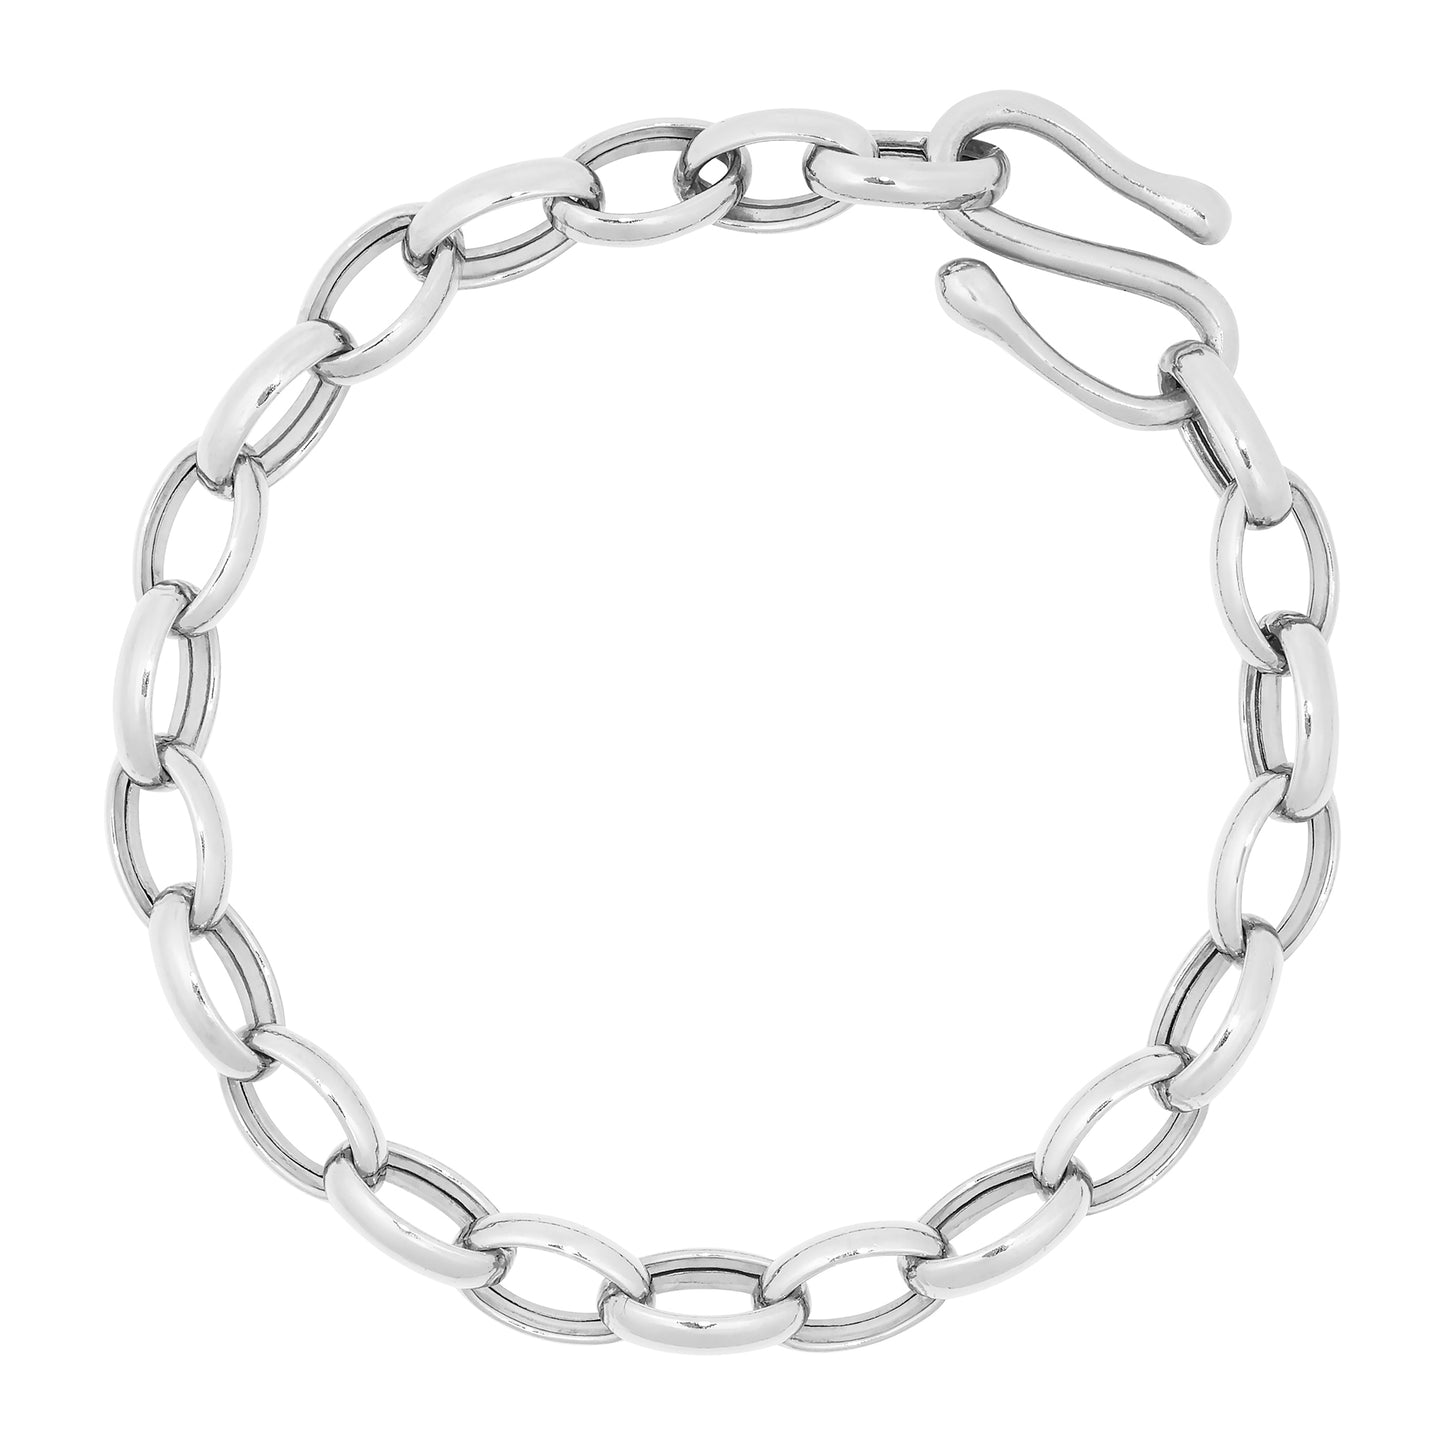 Aqua Silver Bracelet